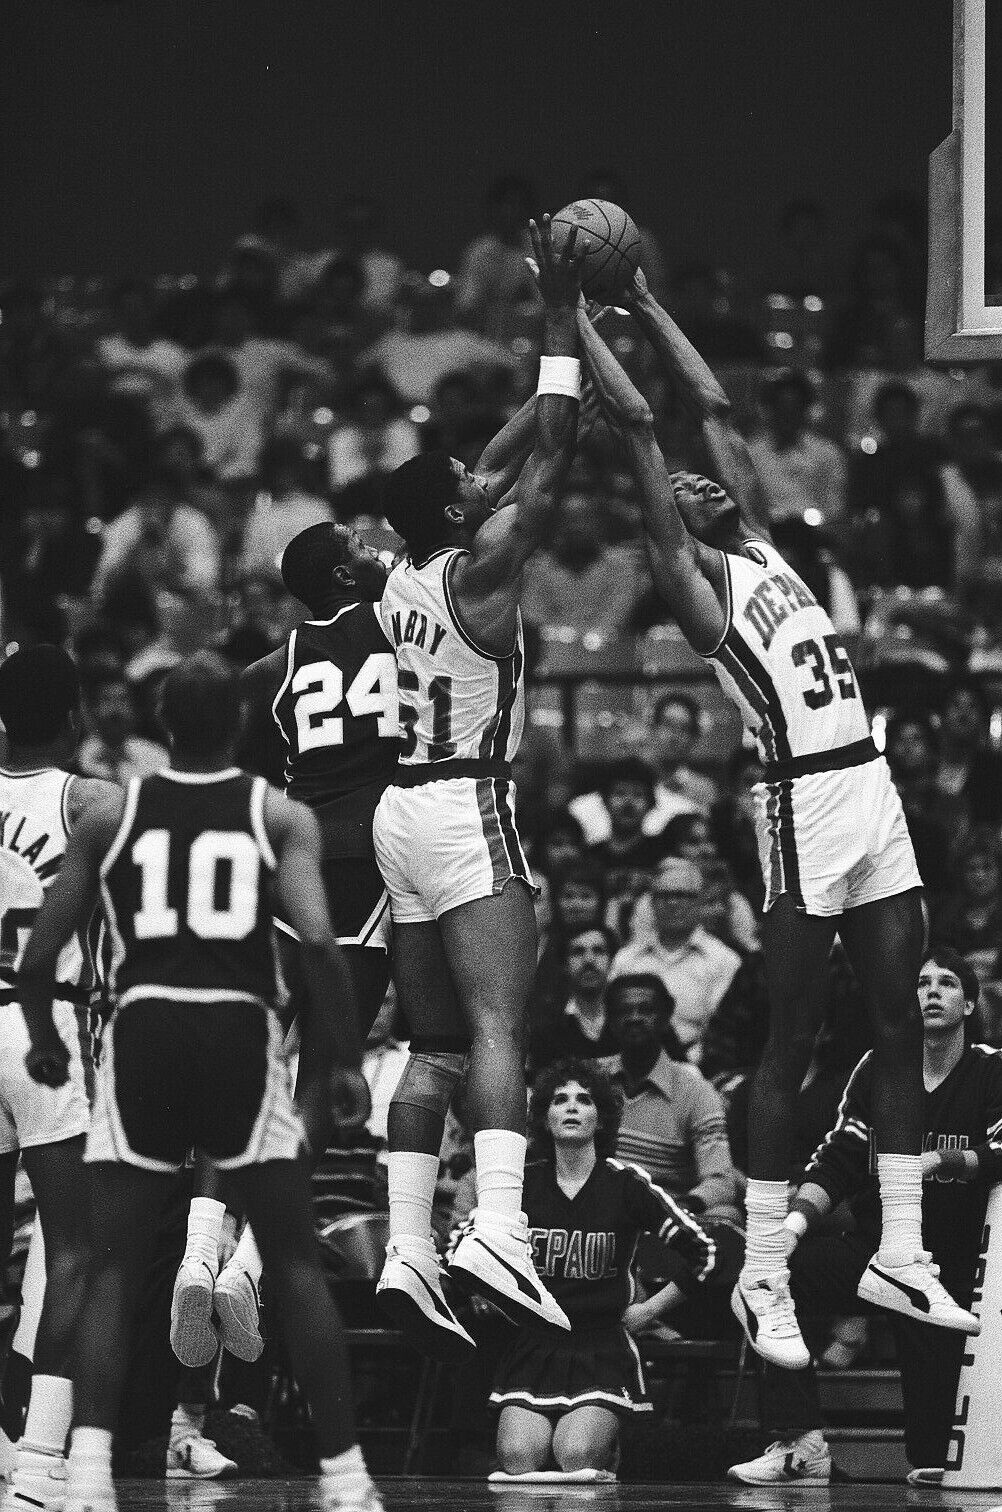 LD125-4 1986 DePaul Cleveland St College Basketball (62) ORIG 35mm B&W NEGATIVES Без бренда - фотография #5